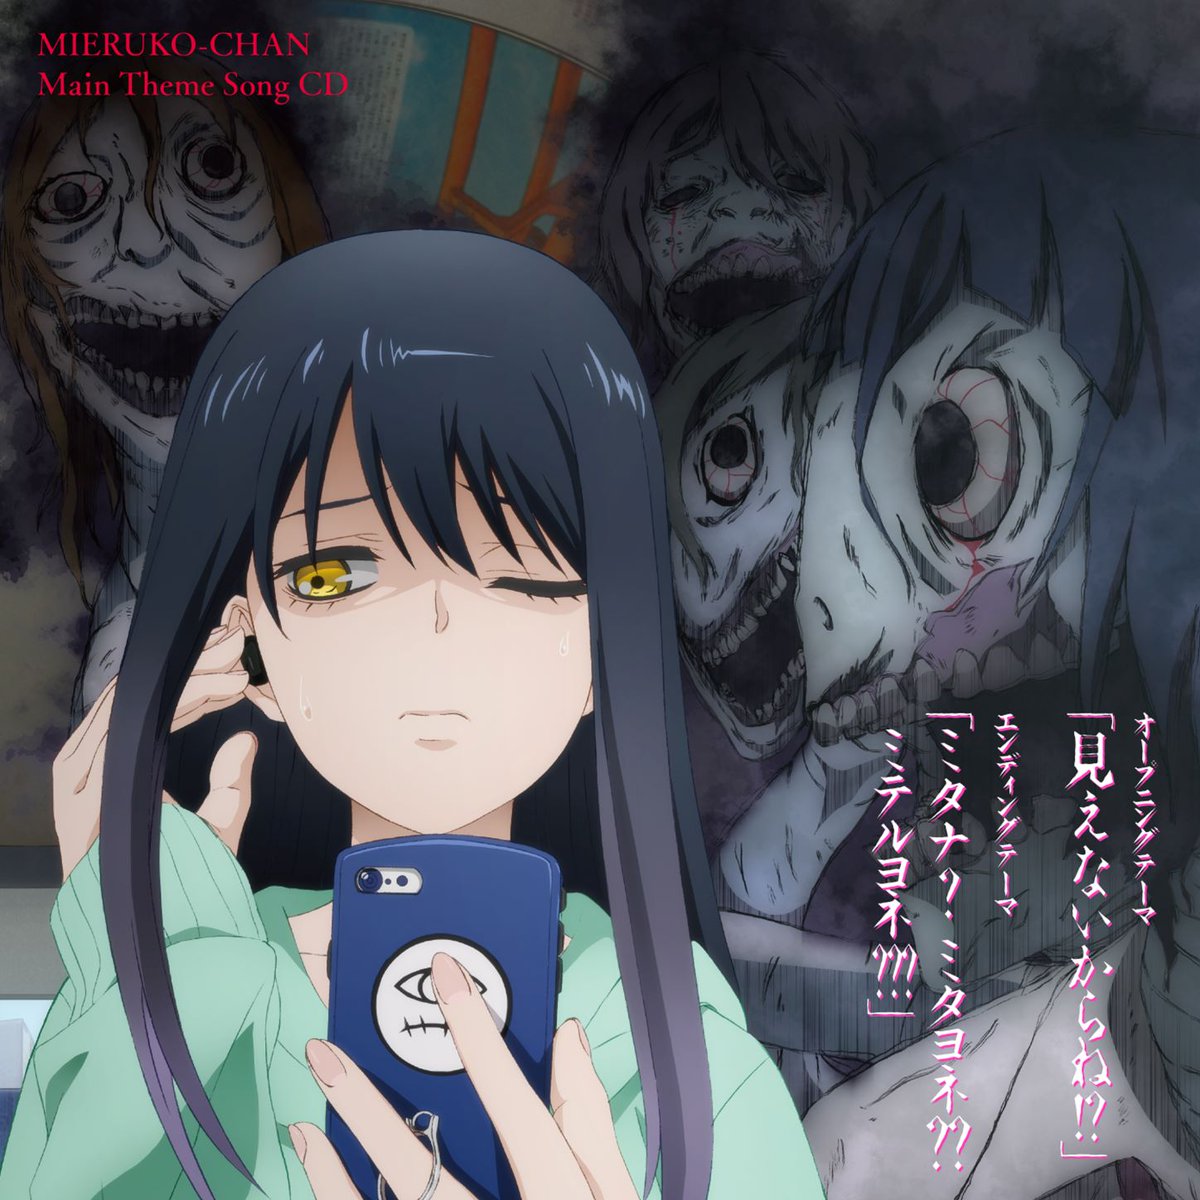 Cover art for『Miko Yotsuya (Sora Amamiya) - 見えないからね!?』from the release『Mieruko-chan Main Theme Song CD